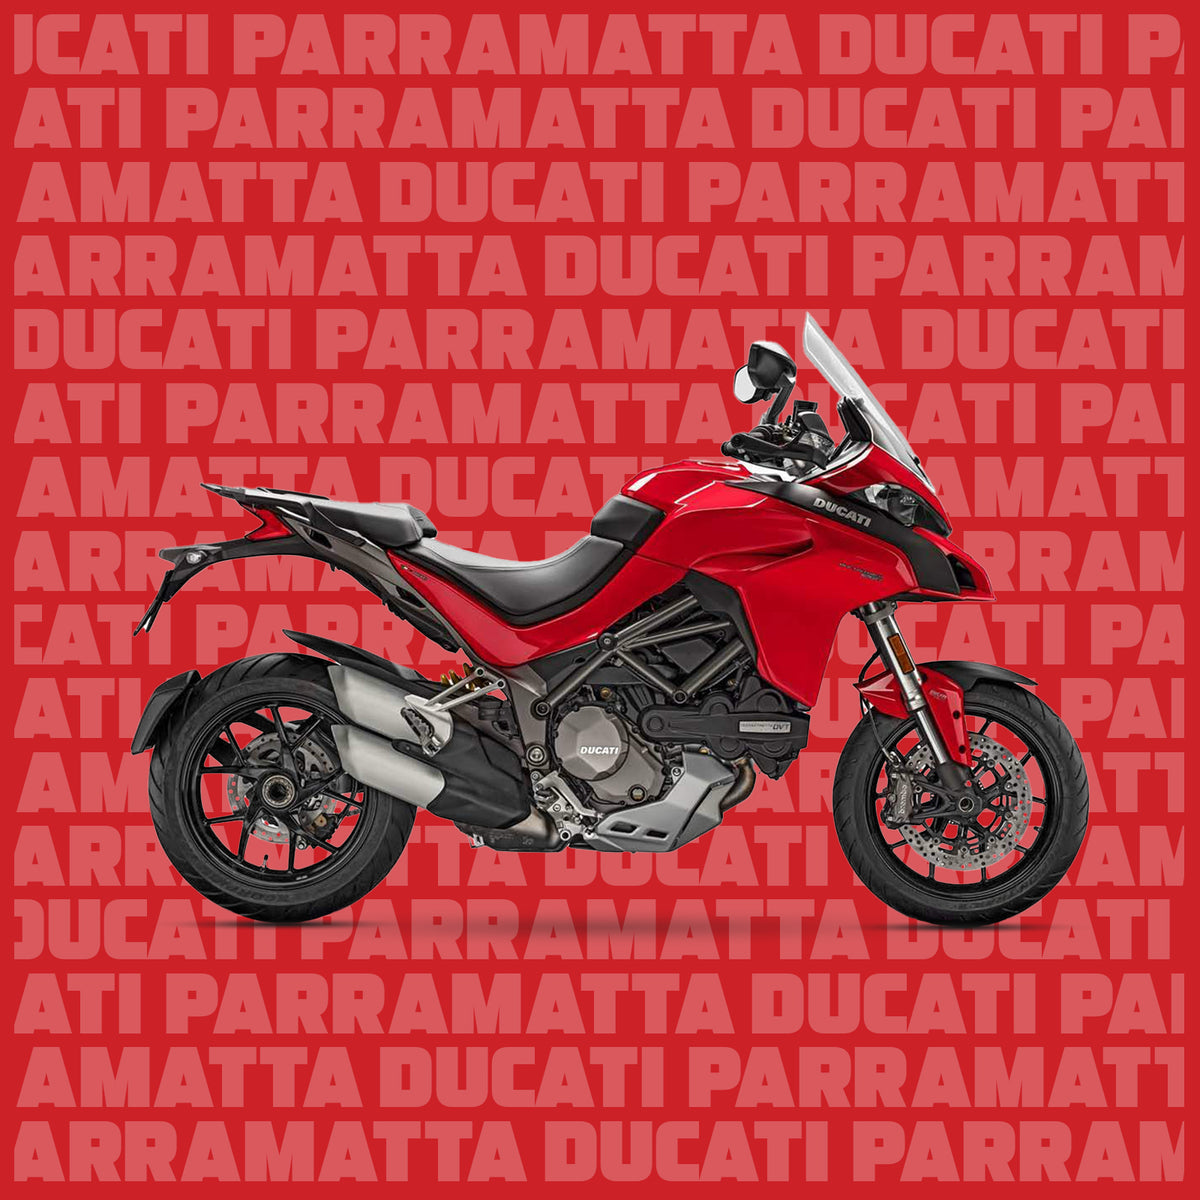 Ducati Multistrada Travel Pack For Sale - low price at Ducati Parramatta